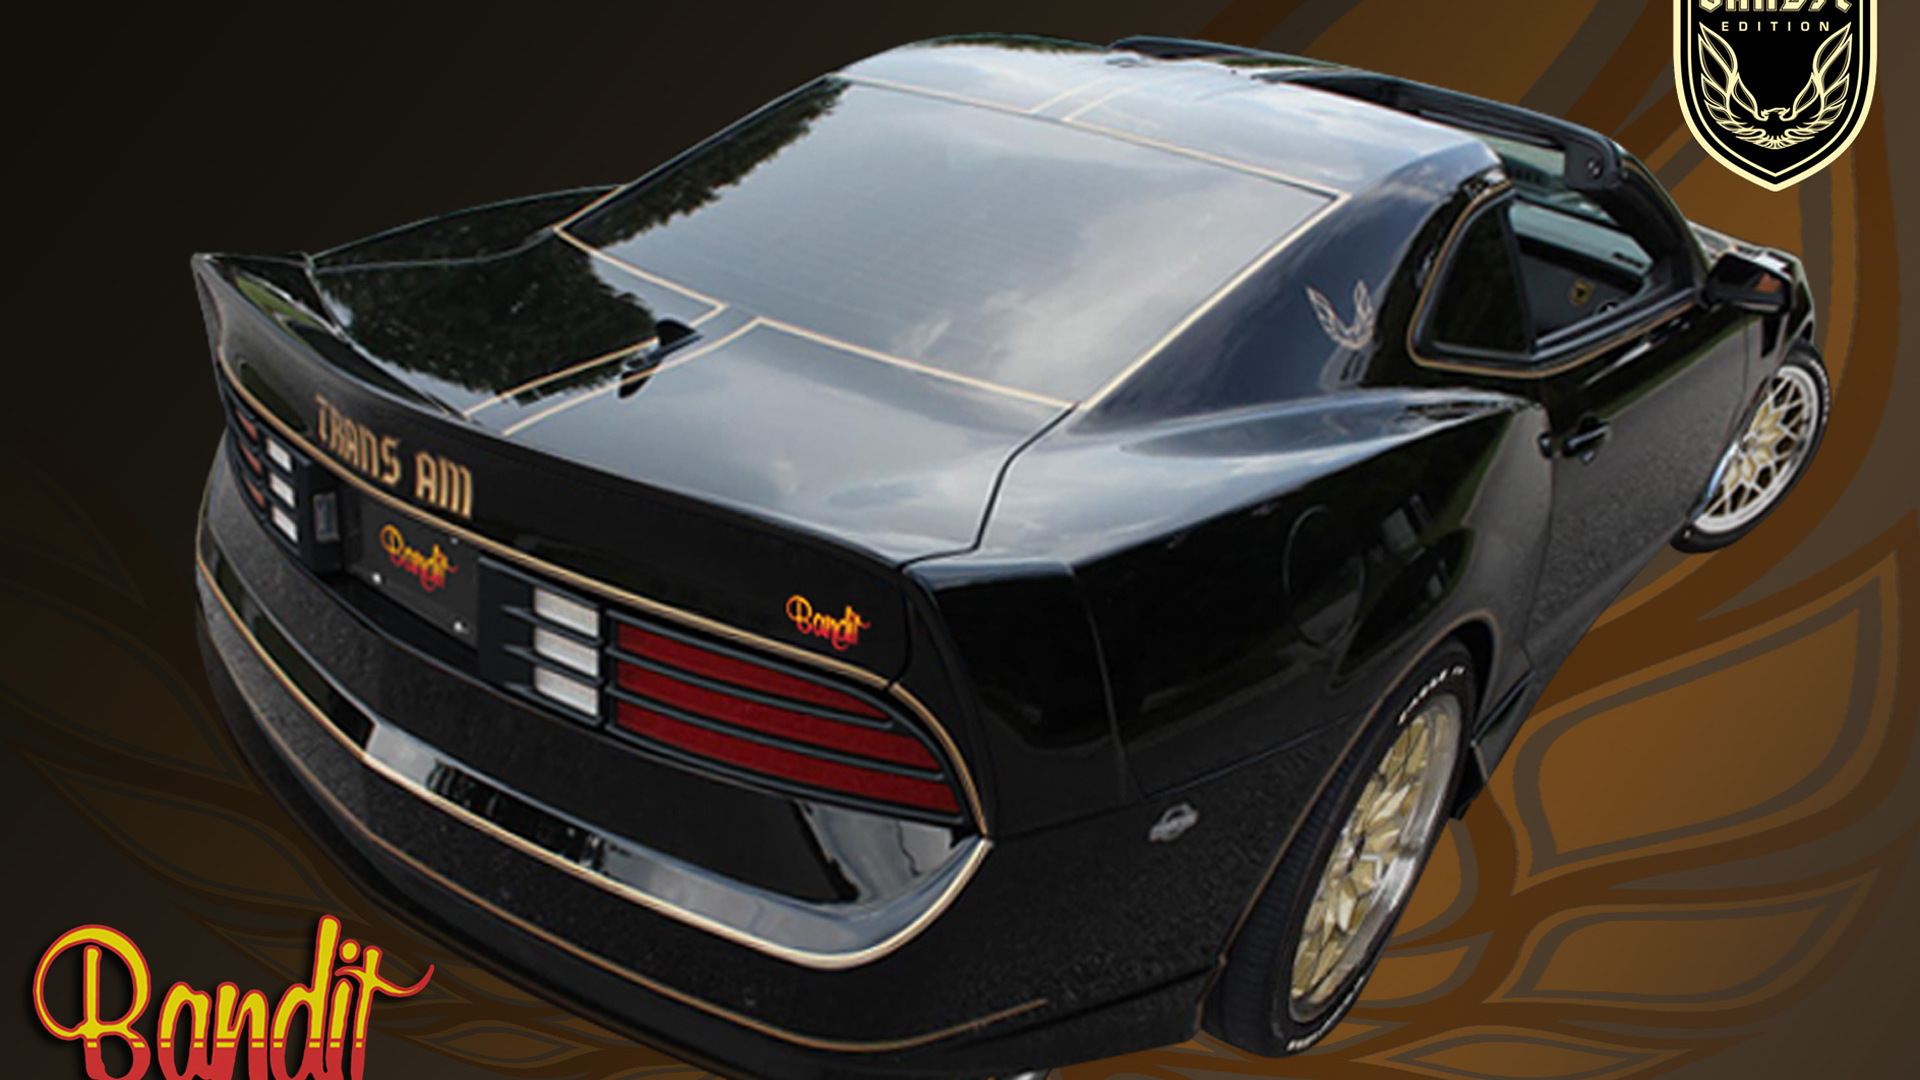 Trans Am SE Bandit Edition based on the fifth-generation Chevrolet Camaro